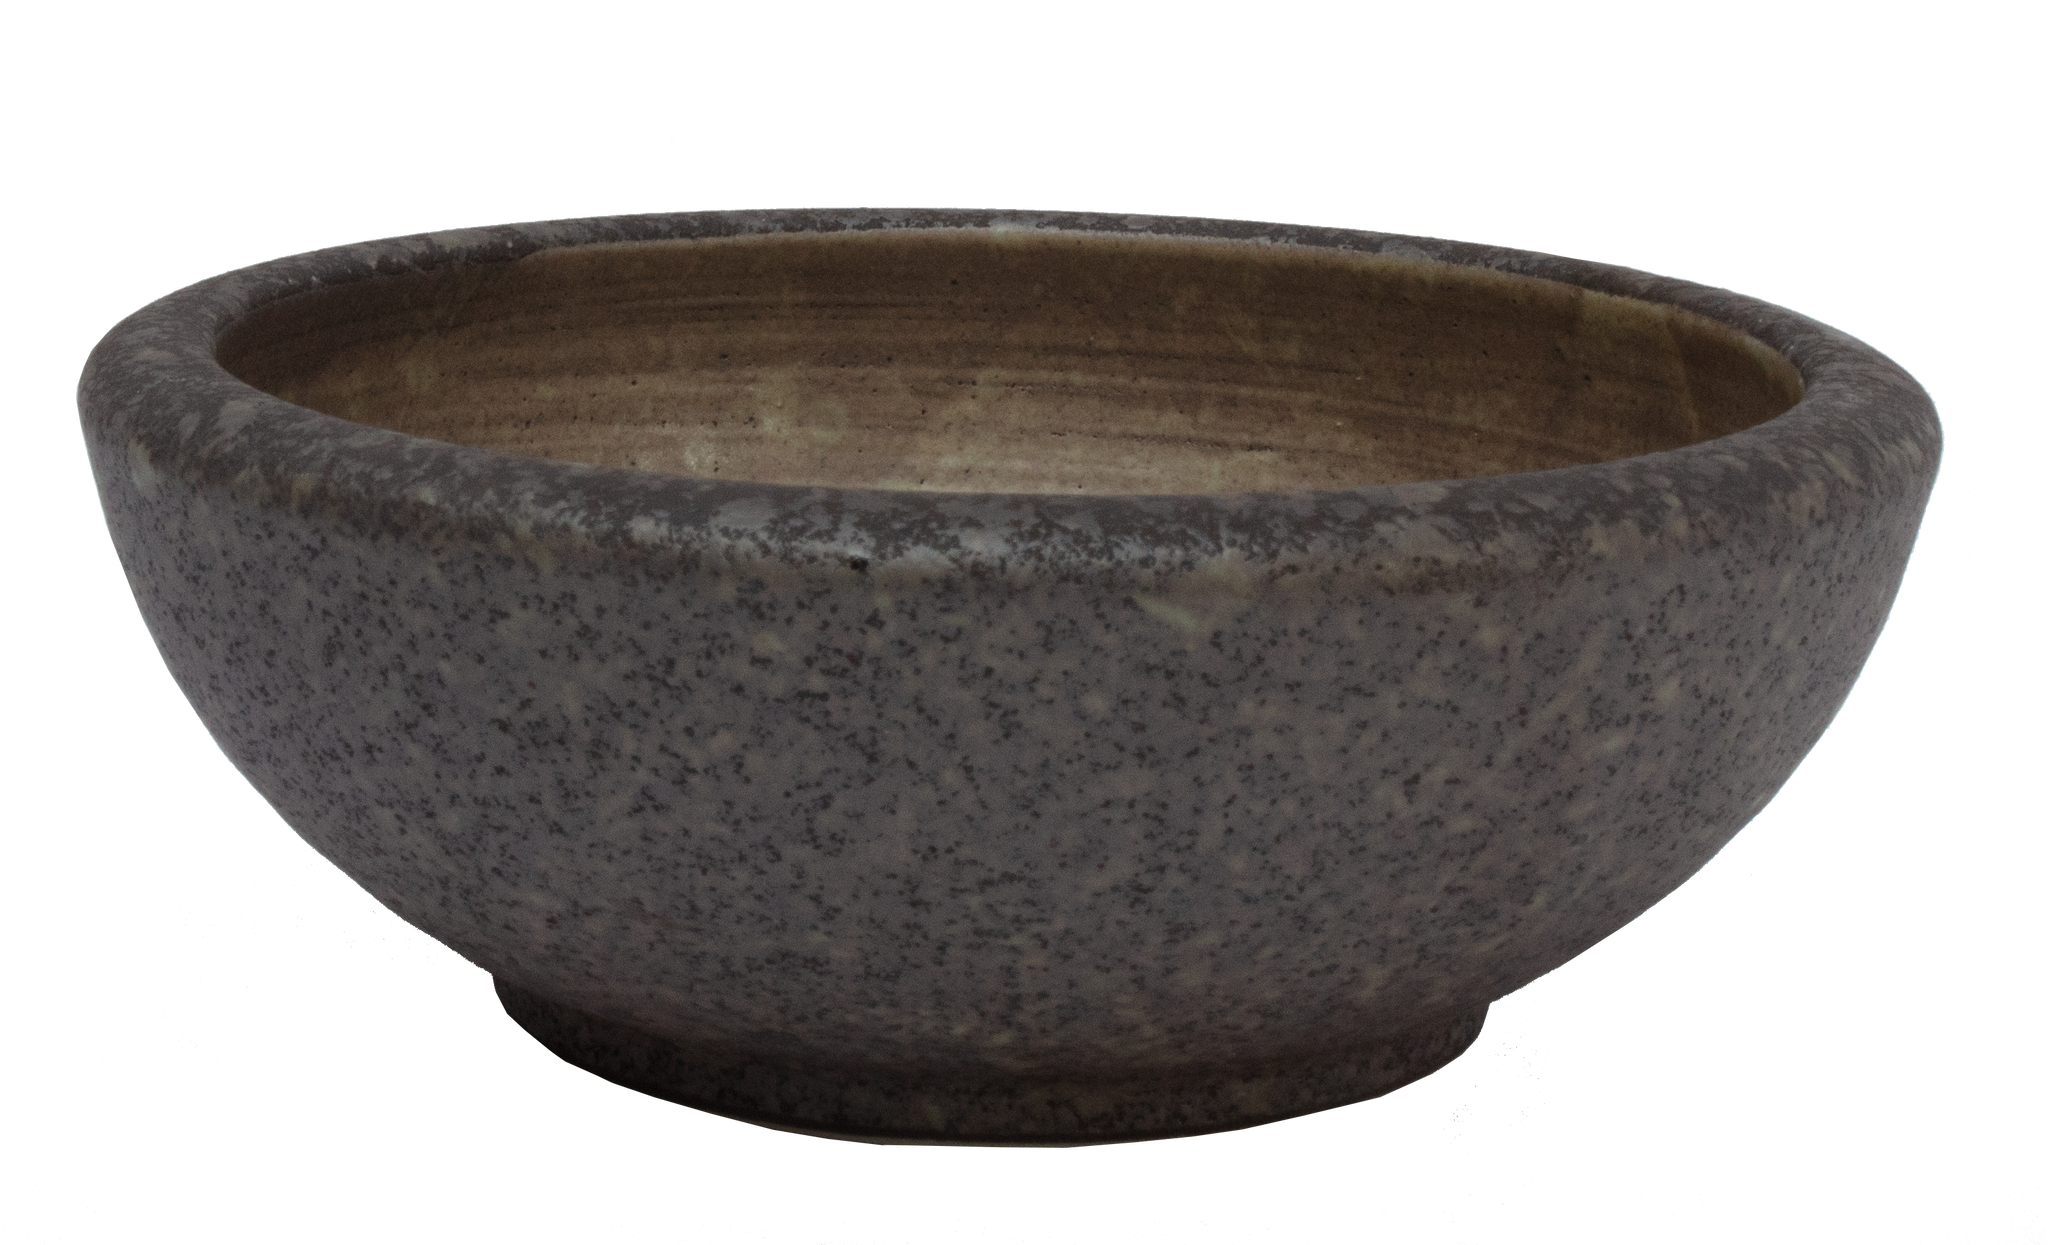 Wood Trunk Bowl Ø12.6 x 4.8cm